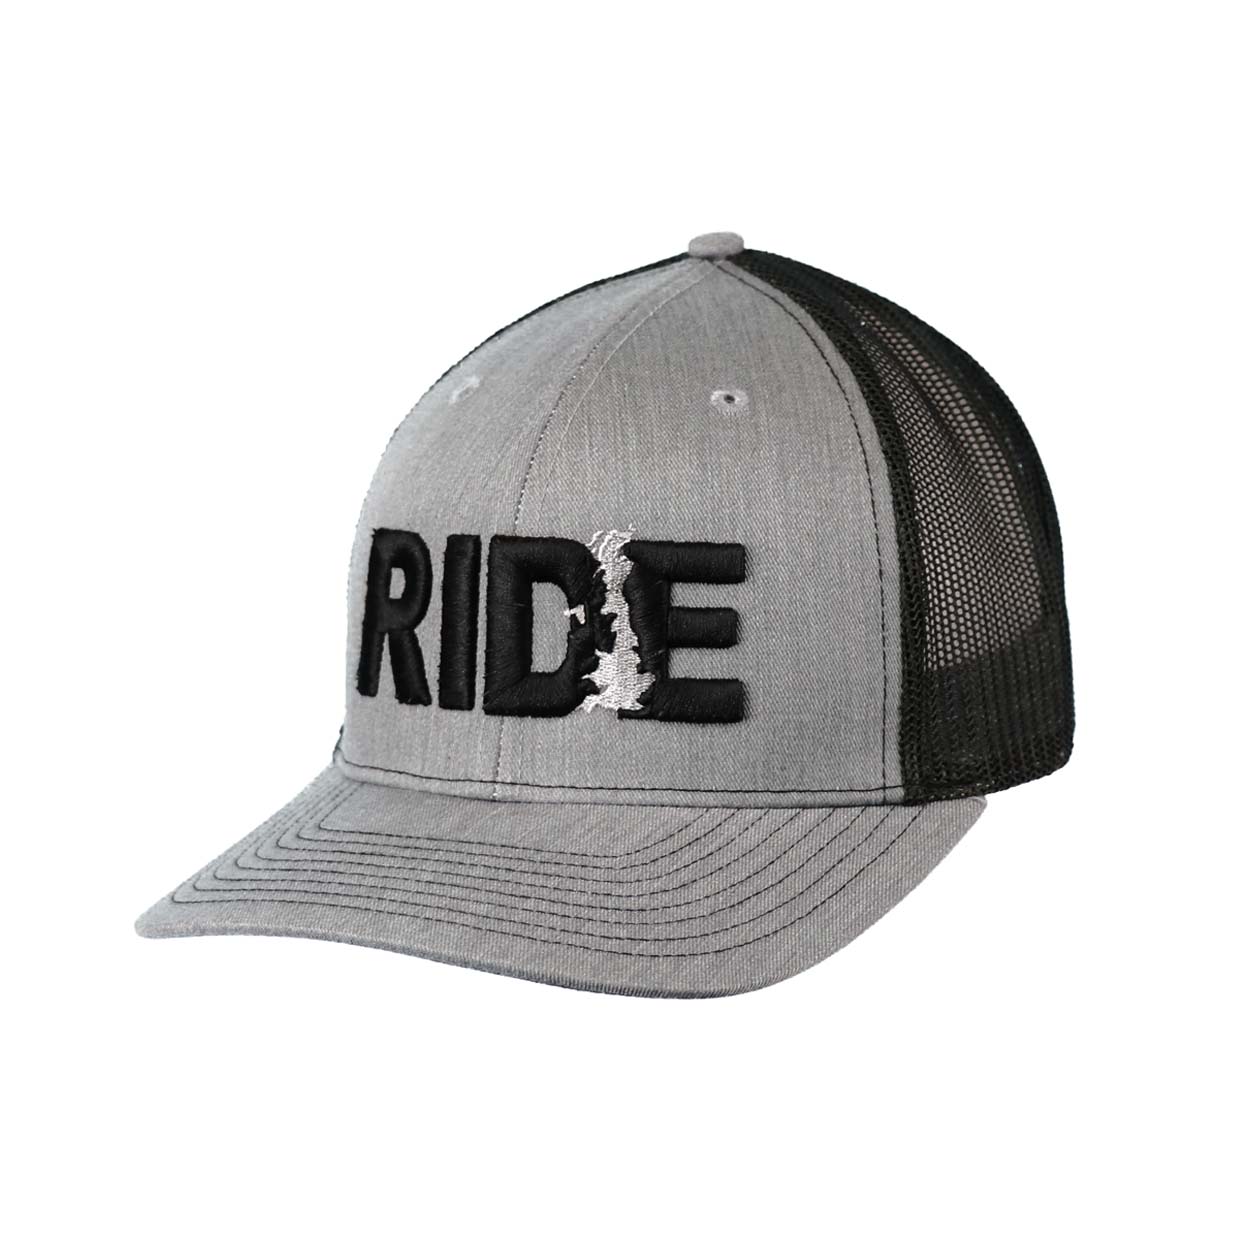 Ride United Kingdom Classic Pro 3D Puff Embroidered Snapback Trucker Hat Heather Gray/Black